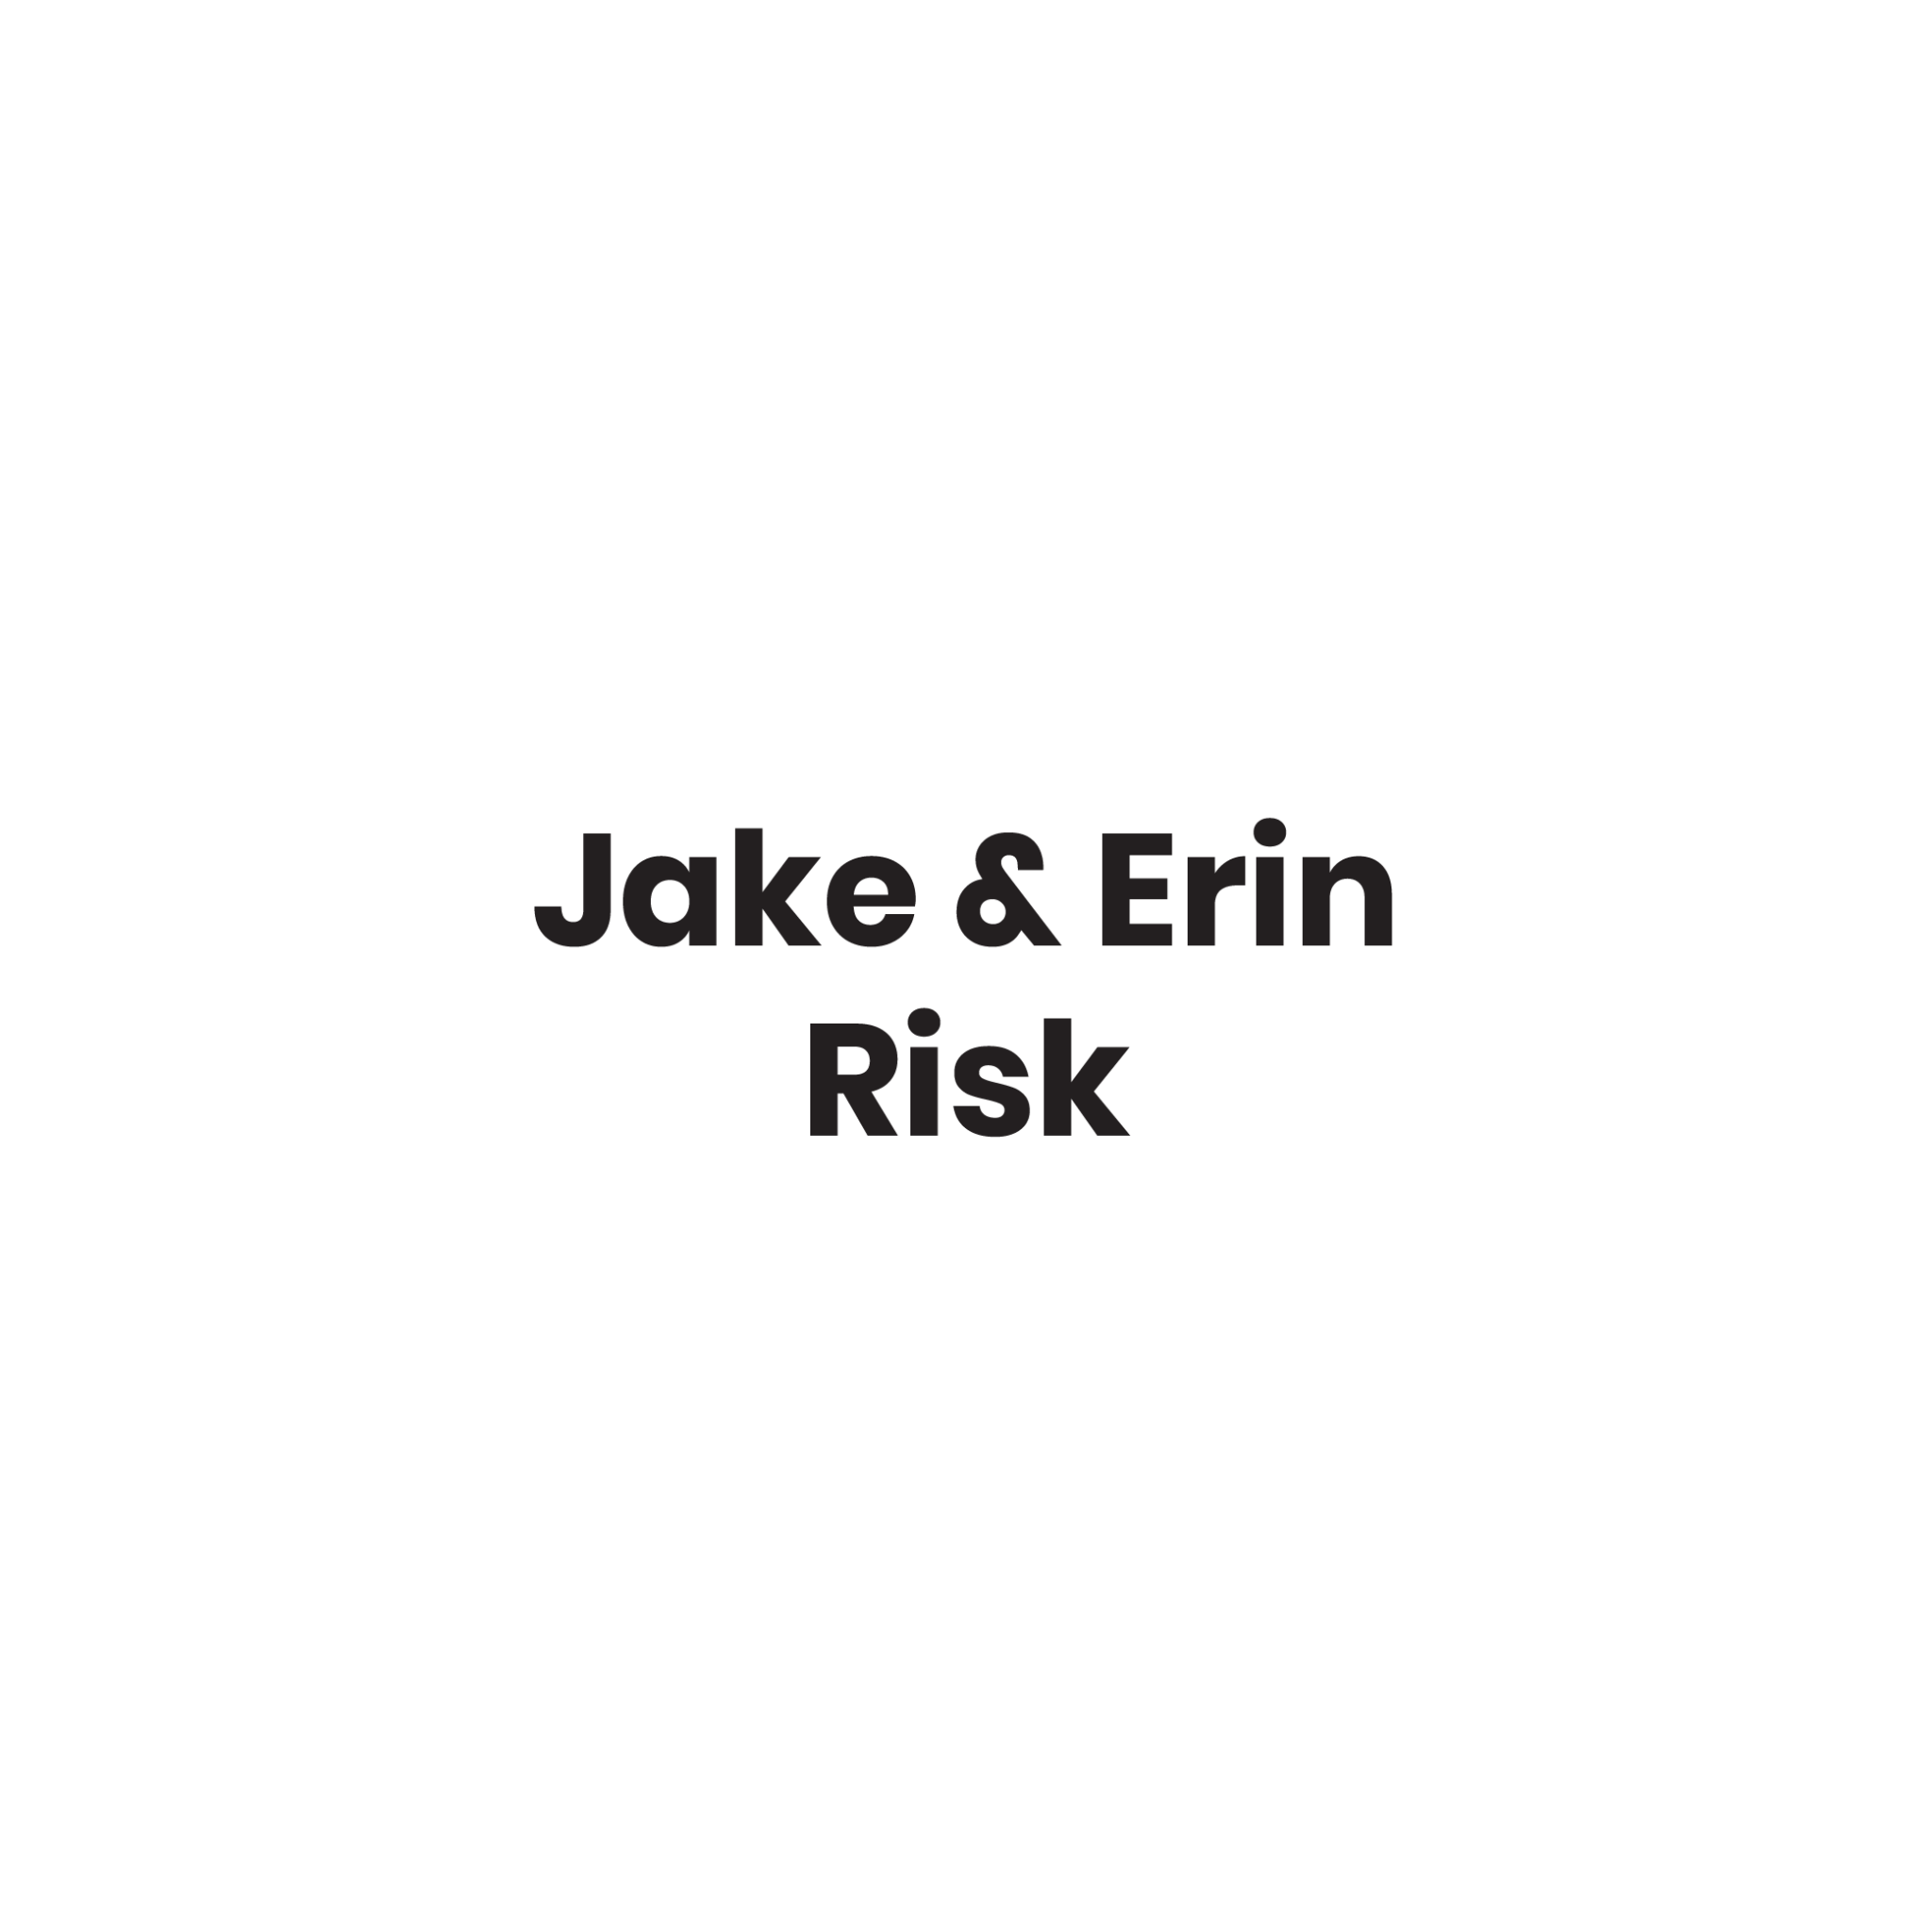 Jake & Erin Risk